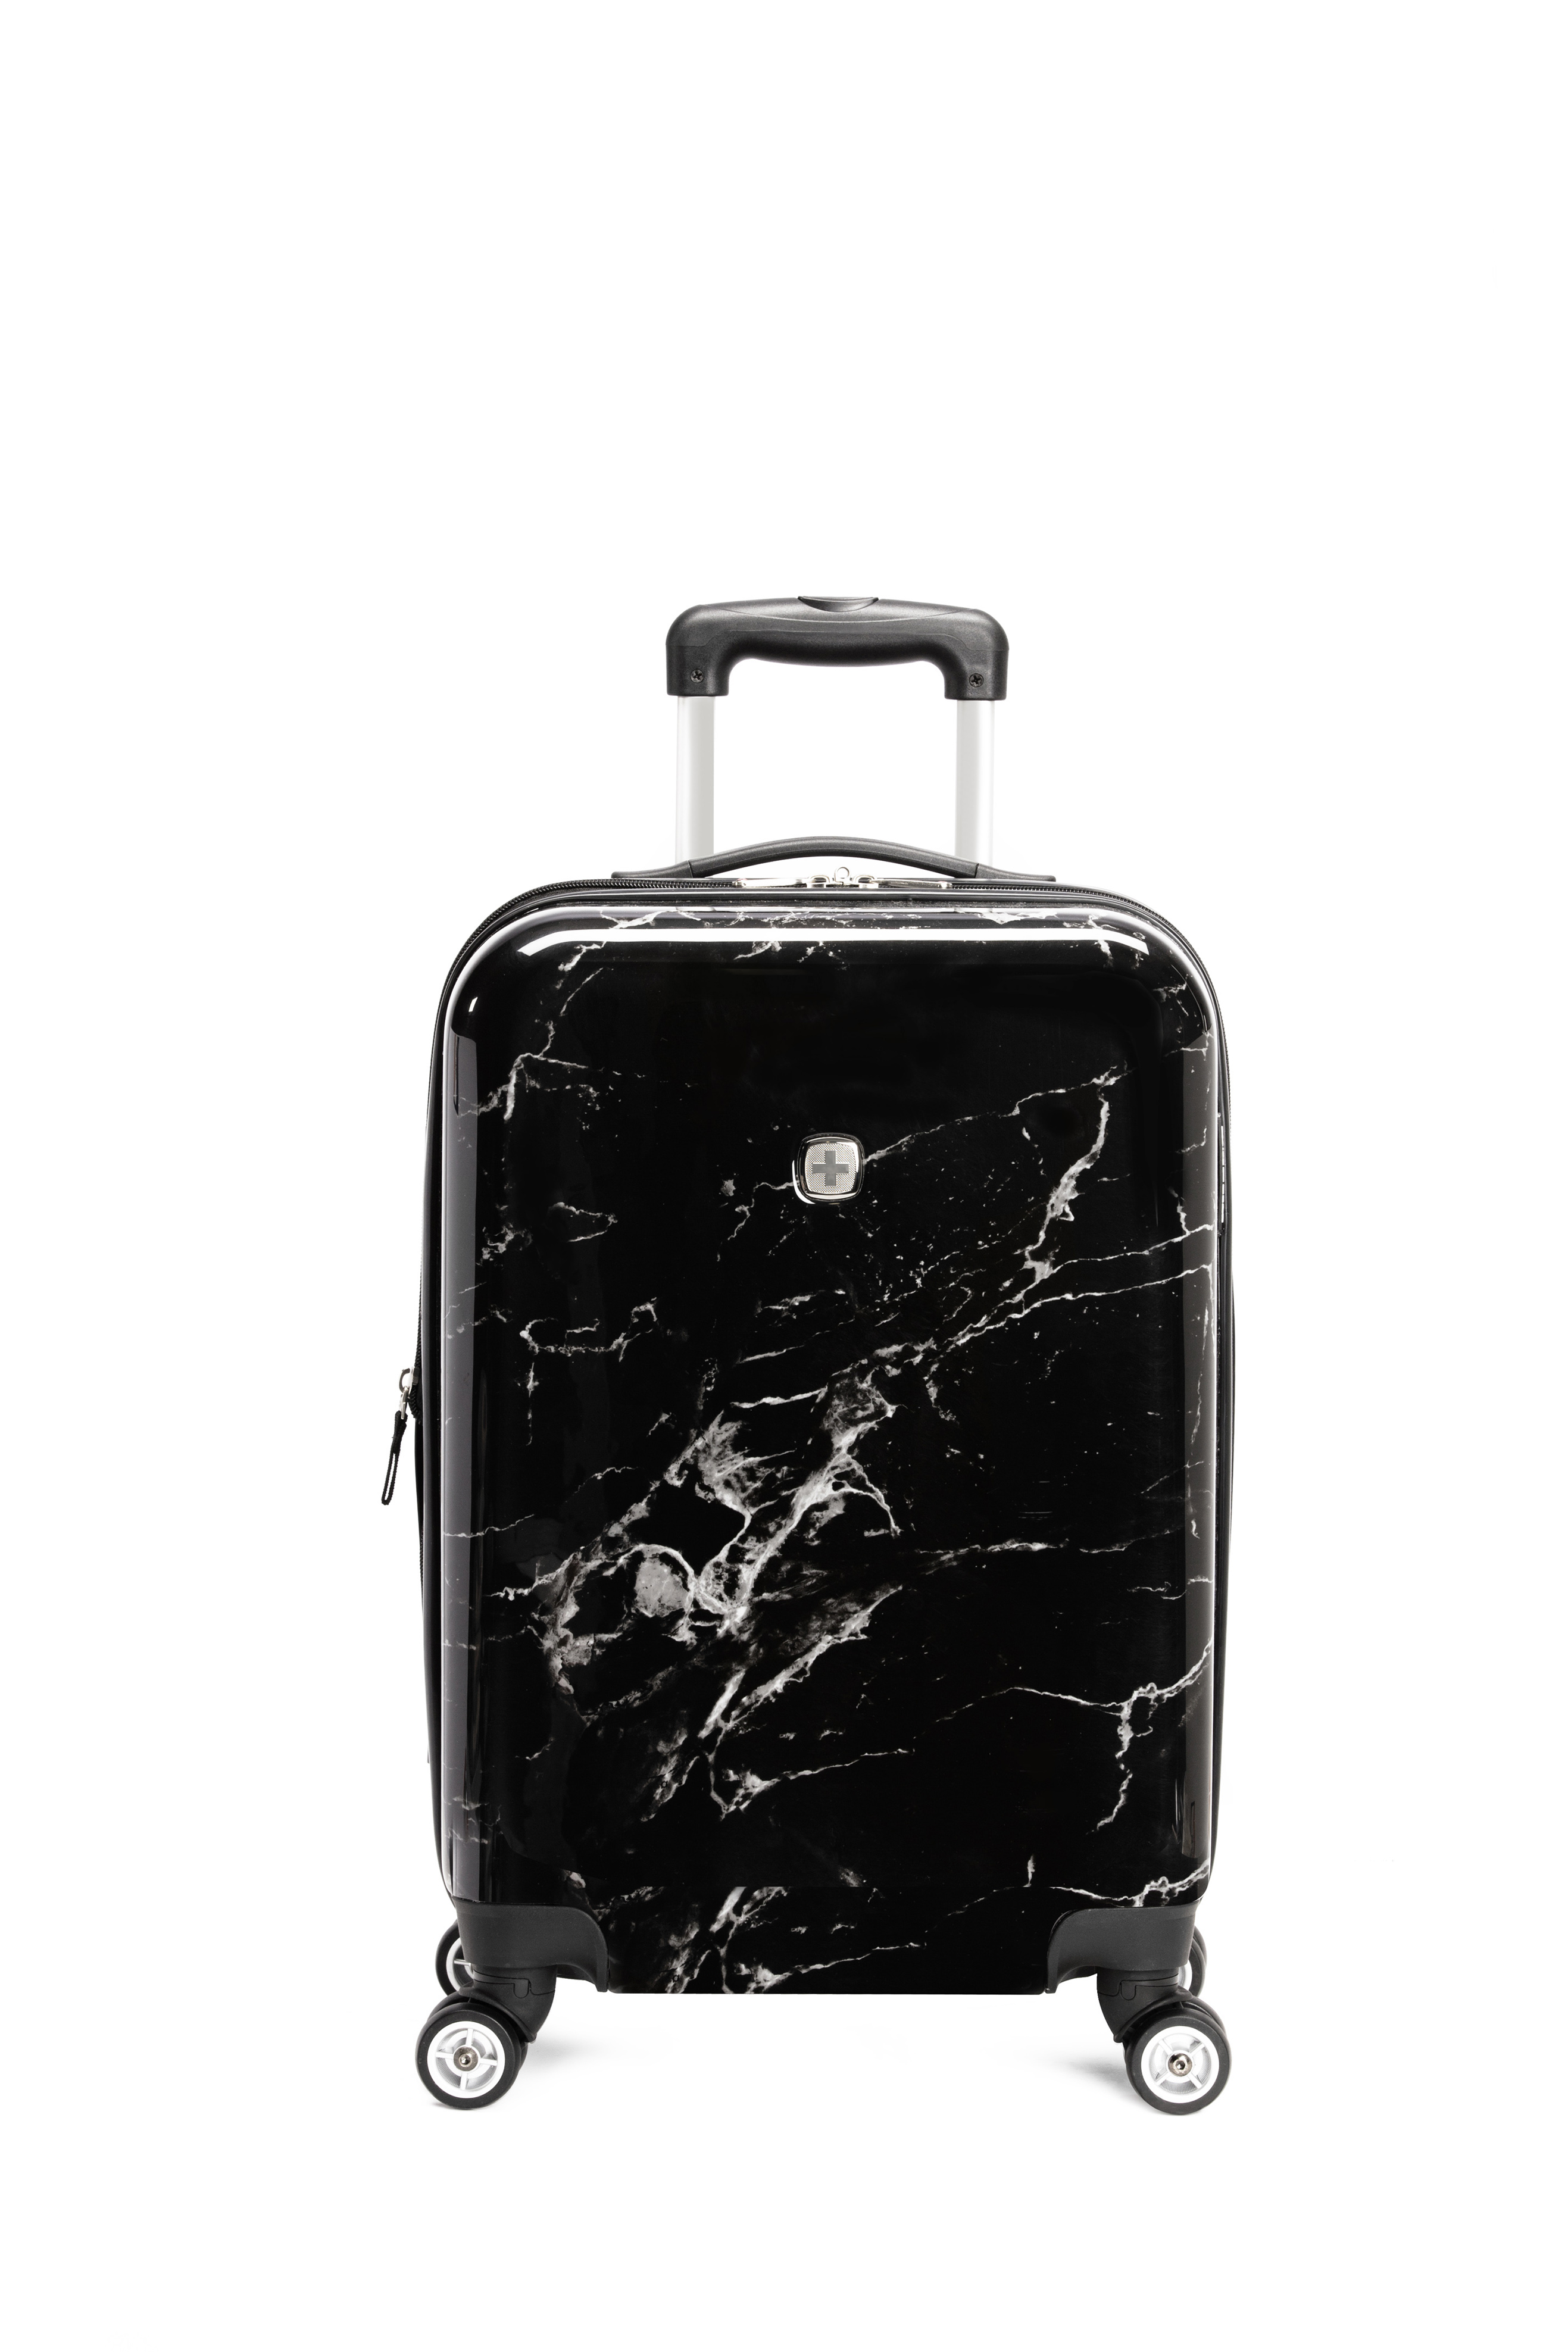 swiss-gear-luggage-save-up-to-15-www-ilcascinone